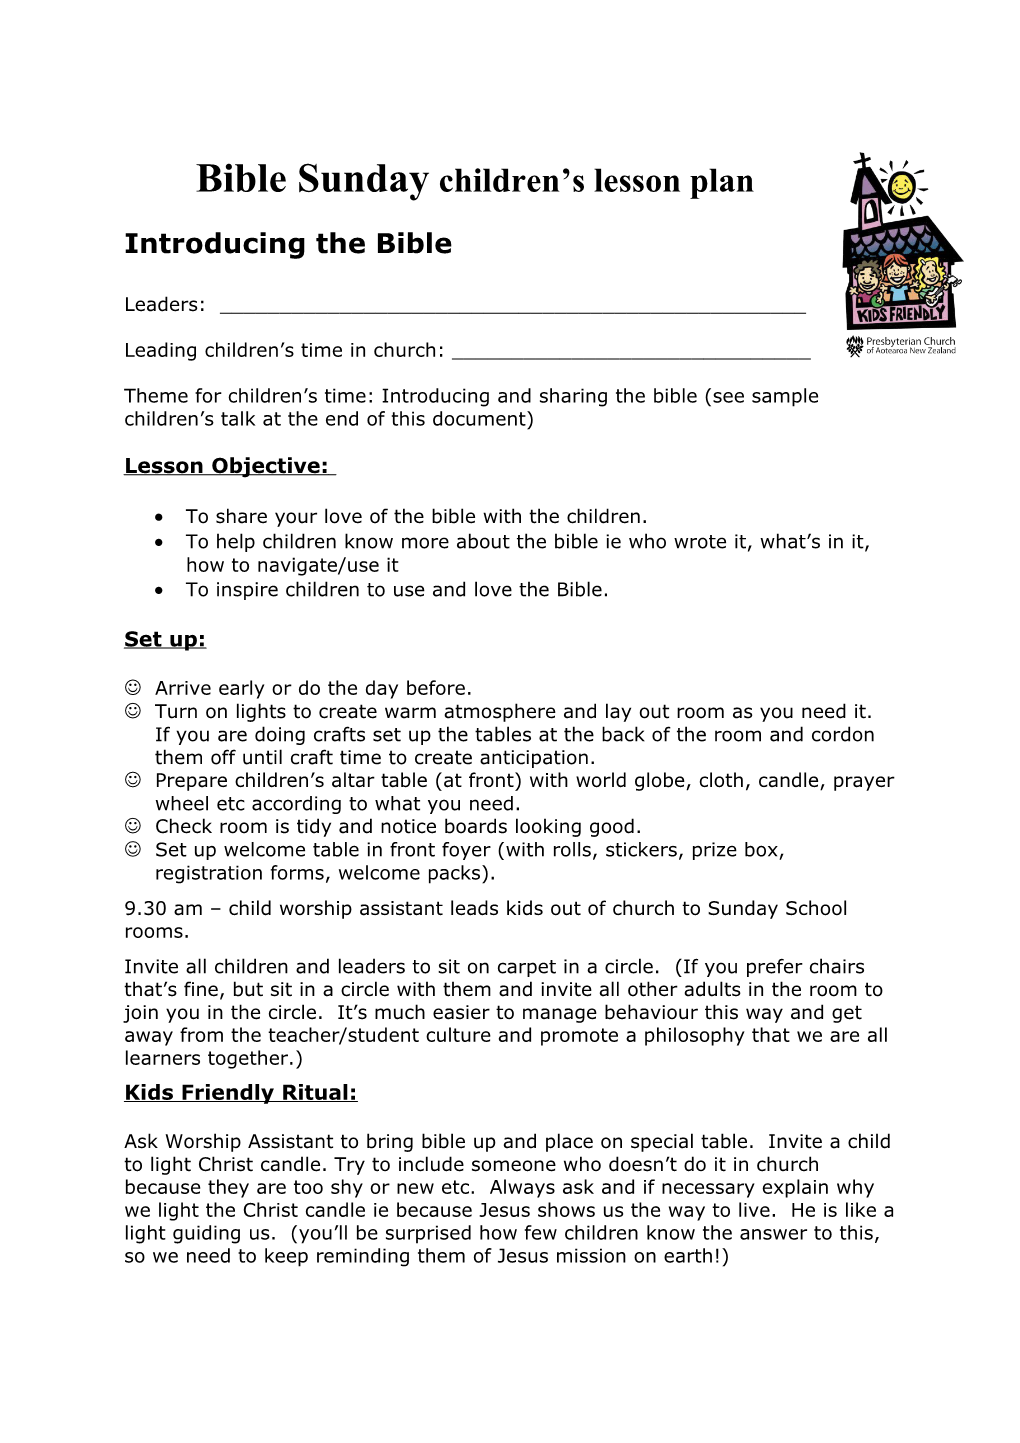 Bible Sunday Children S Lesson Plan